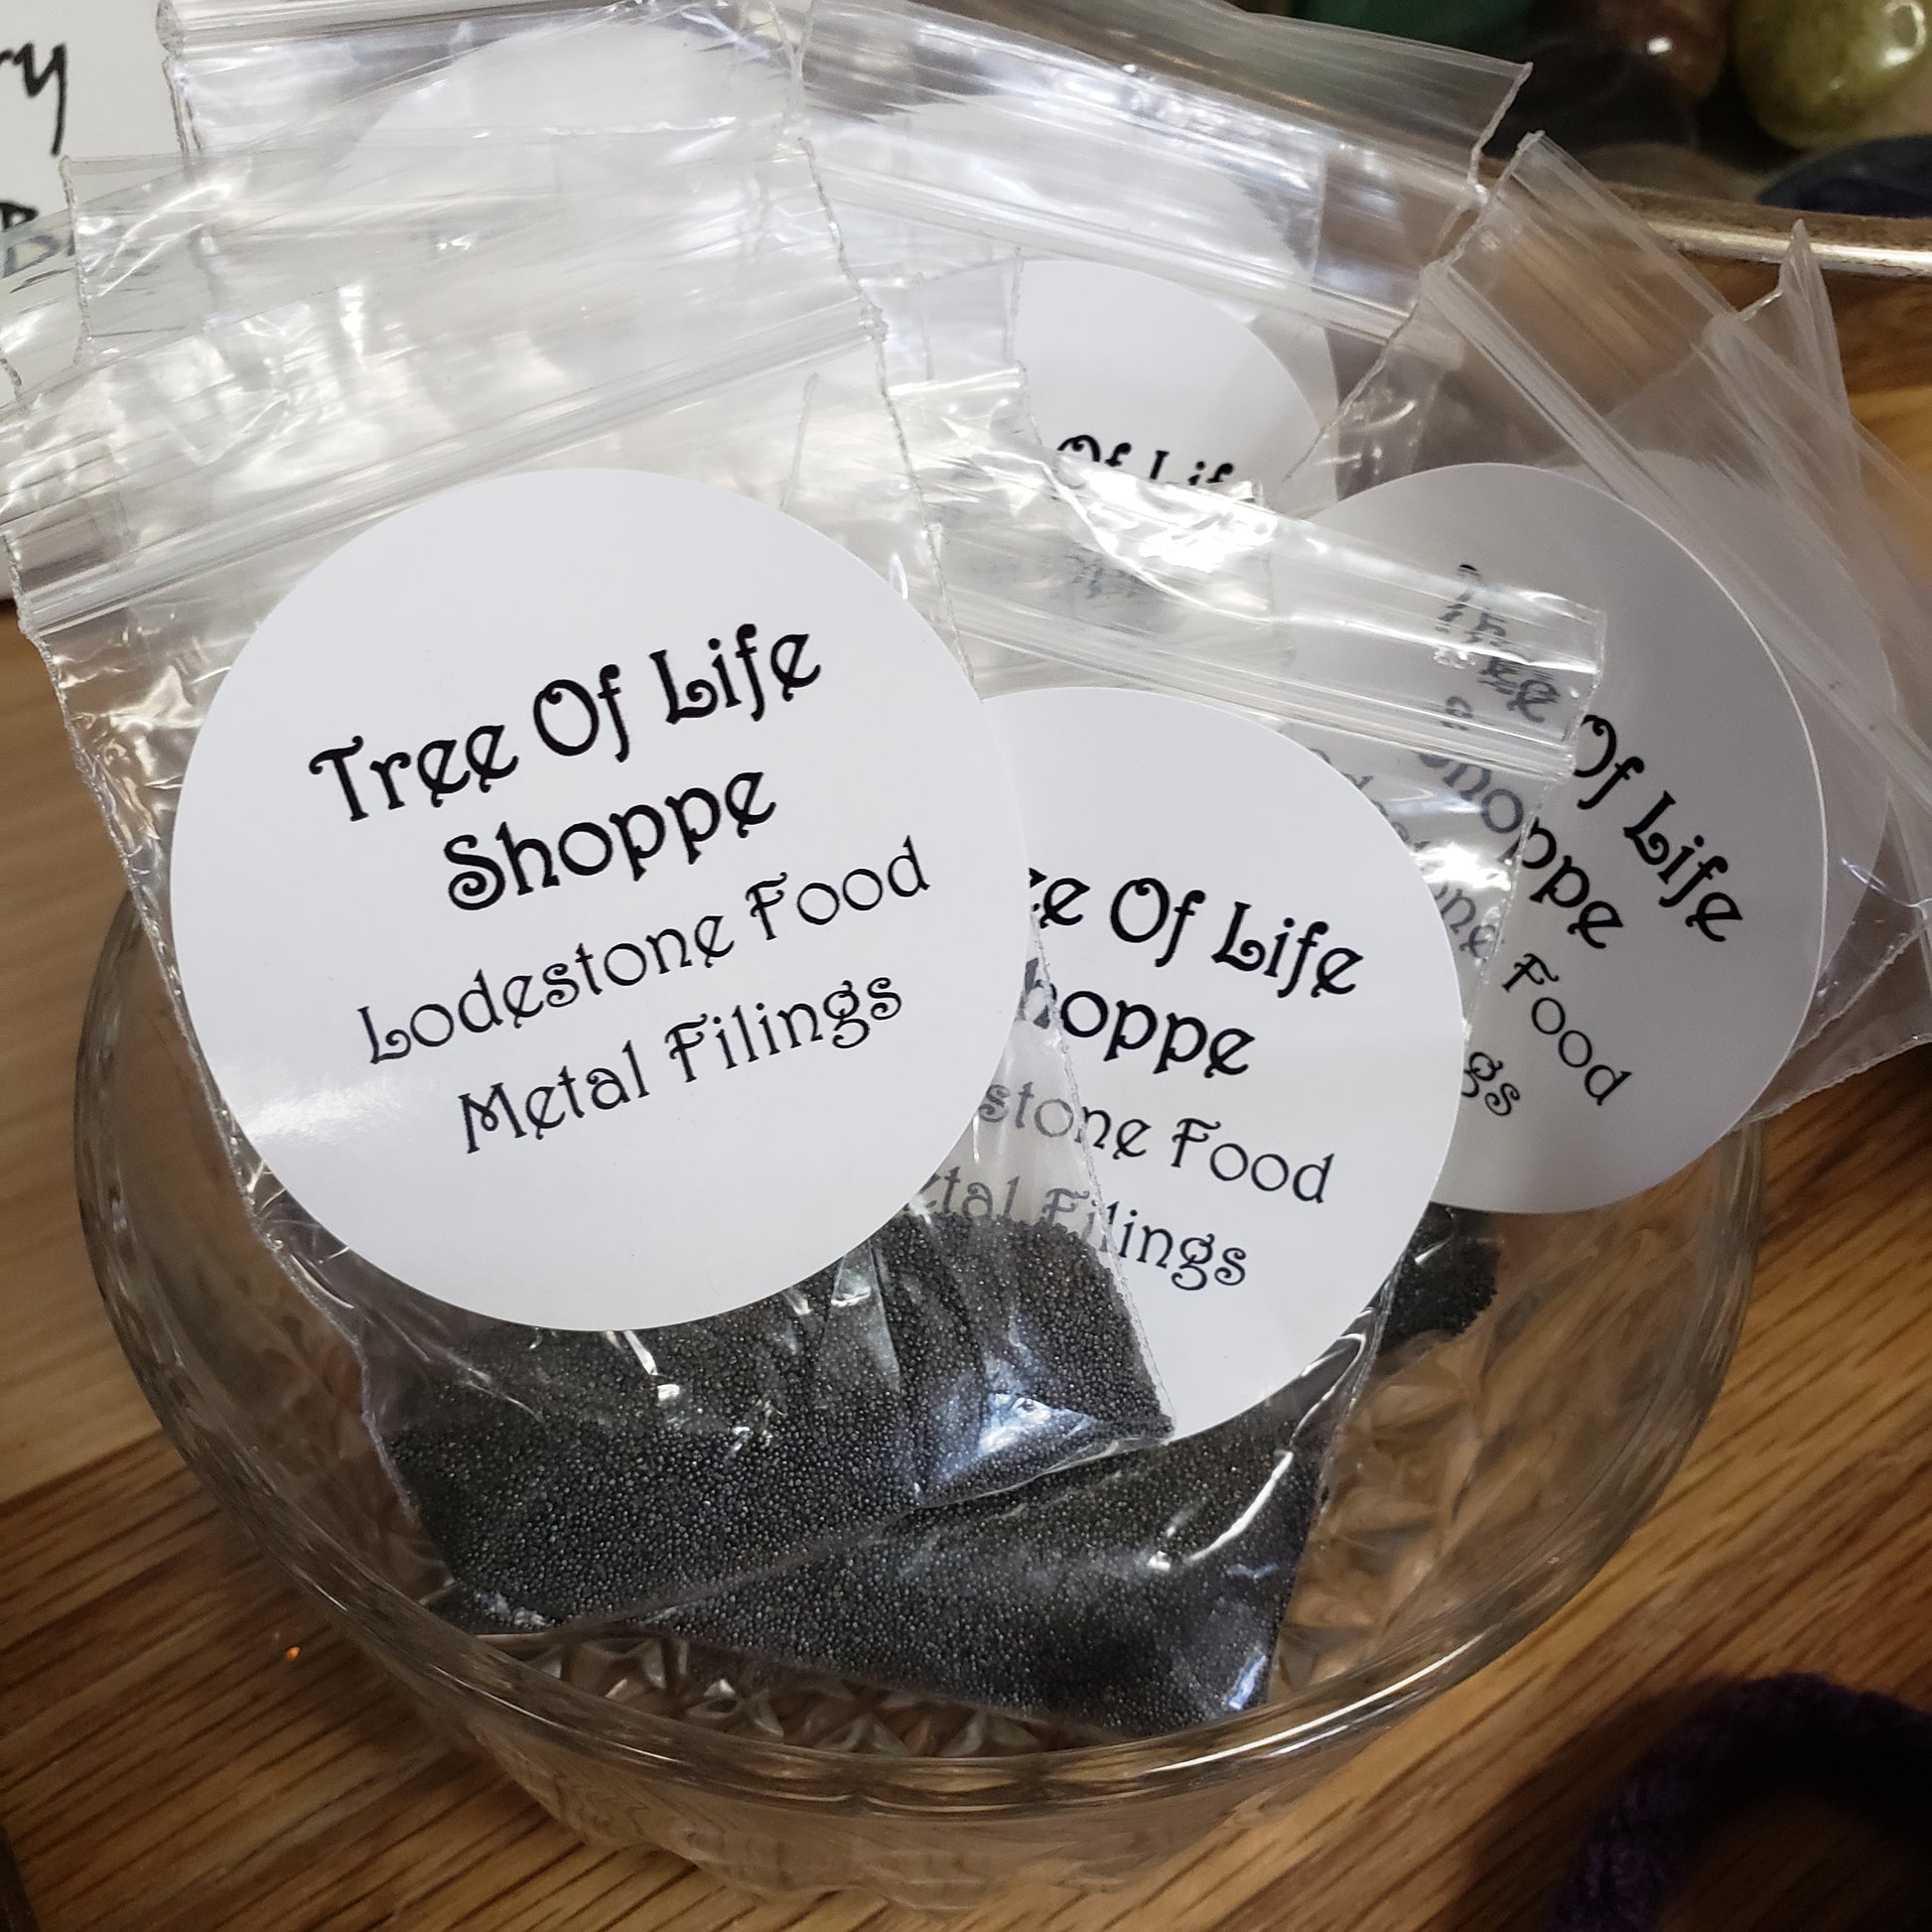 Lodestone Food - Tree Of Life Shoppe